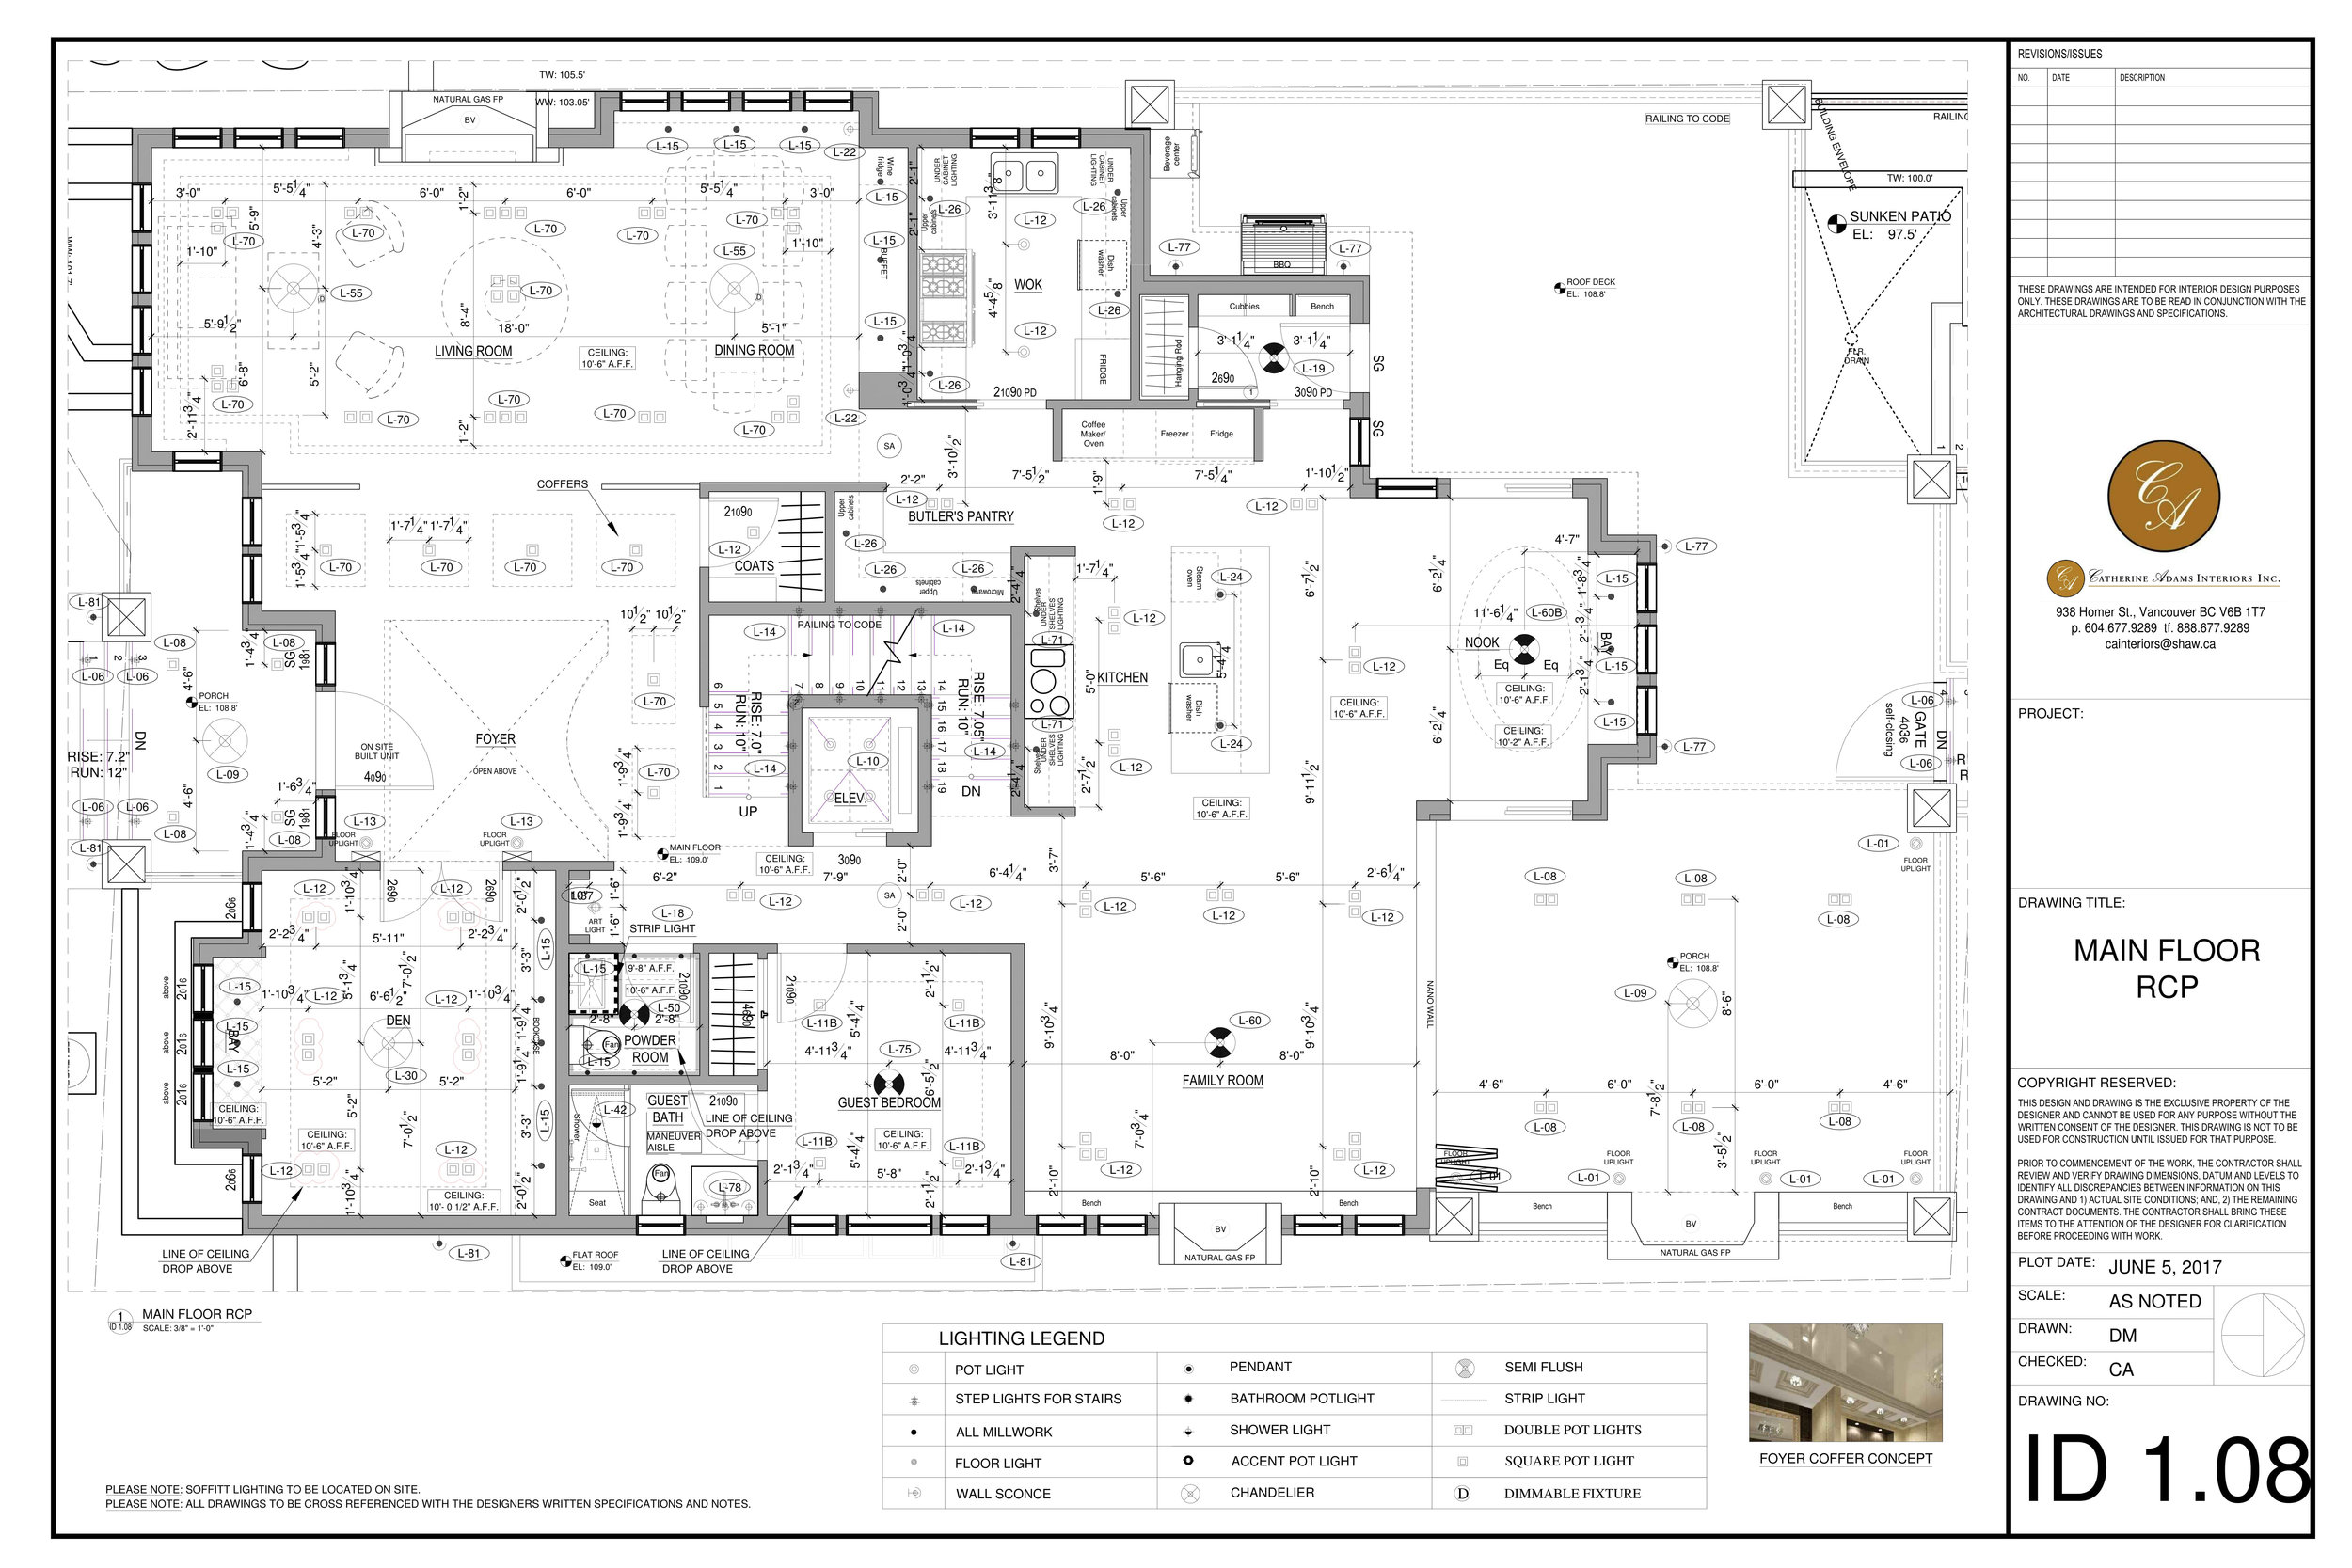 ID 1.08 - Reflect Ceiling Plan - Main Floor  05.JUNE.2017-1.jpg